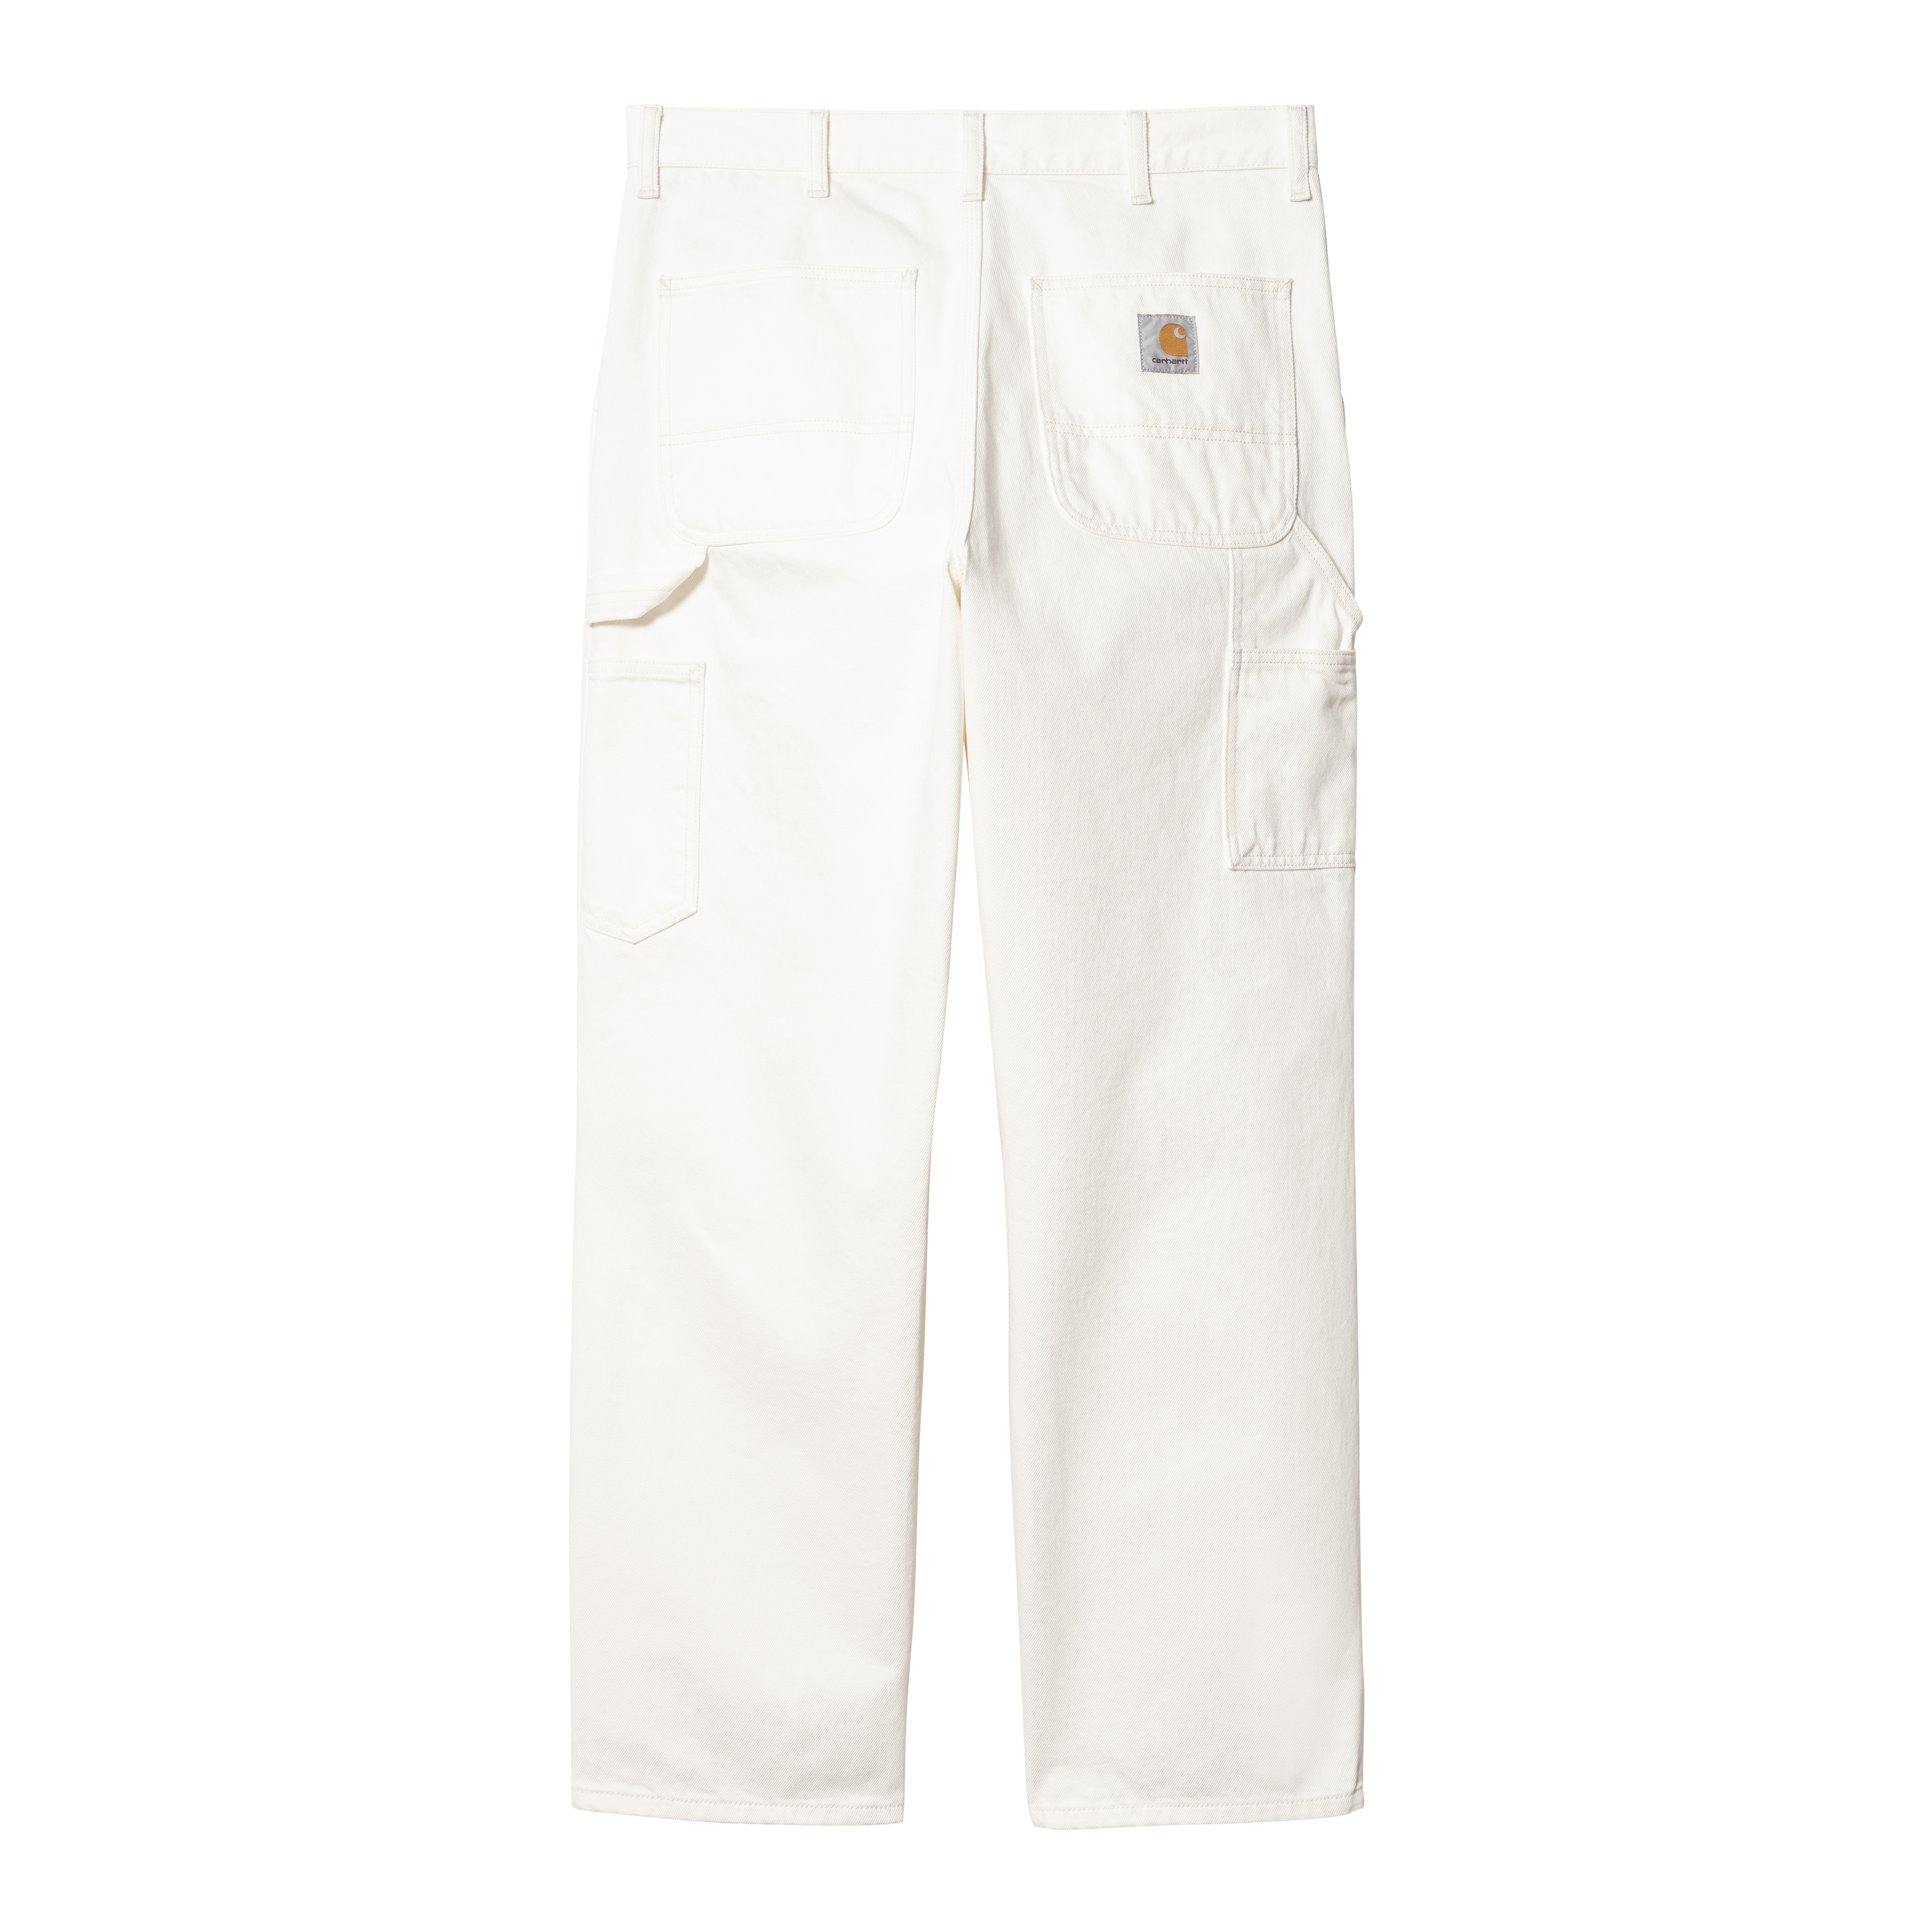 Carhartt WIP Single Knee Pant in Bianco